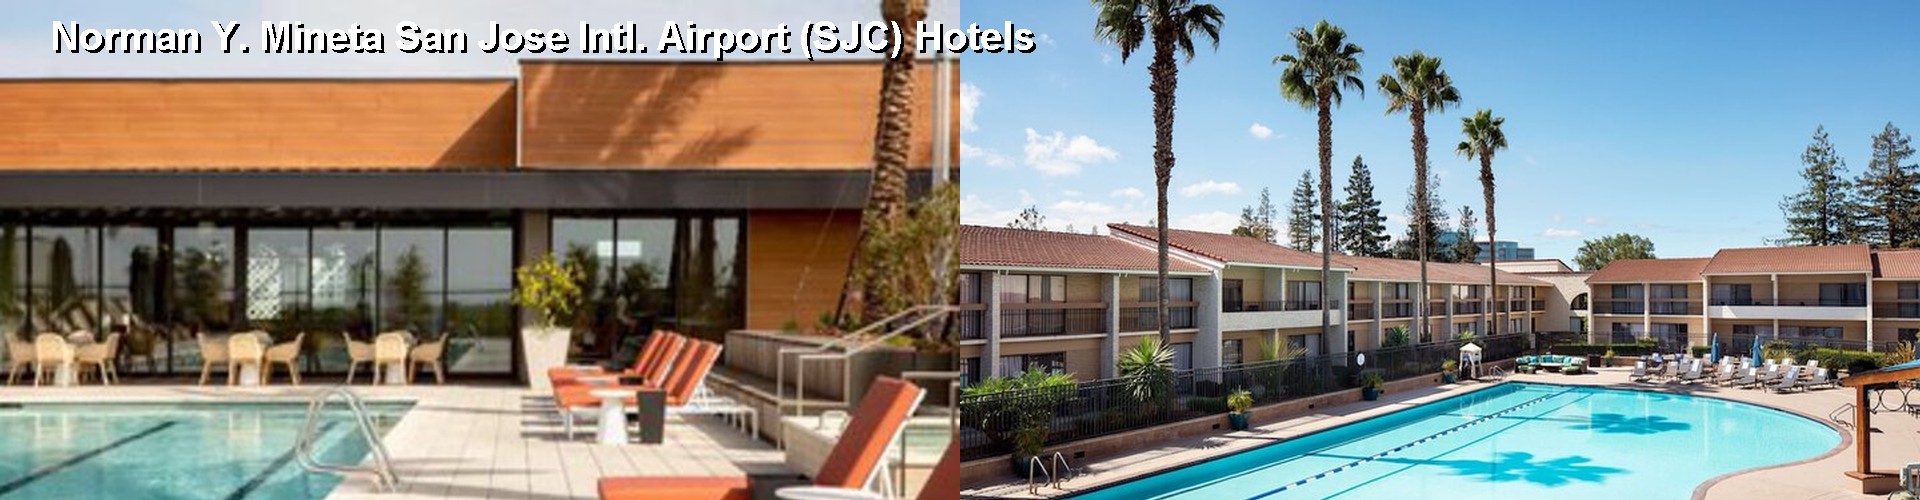 5 Best Hotels near Norman Y. Mineta San Jose Intl. Airport (SJC)